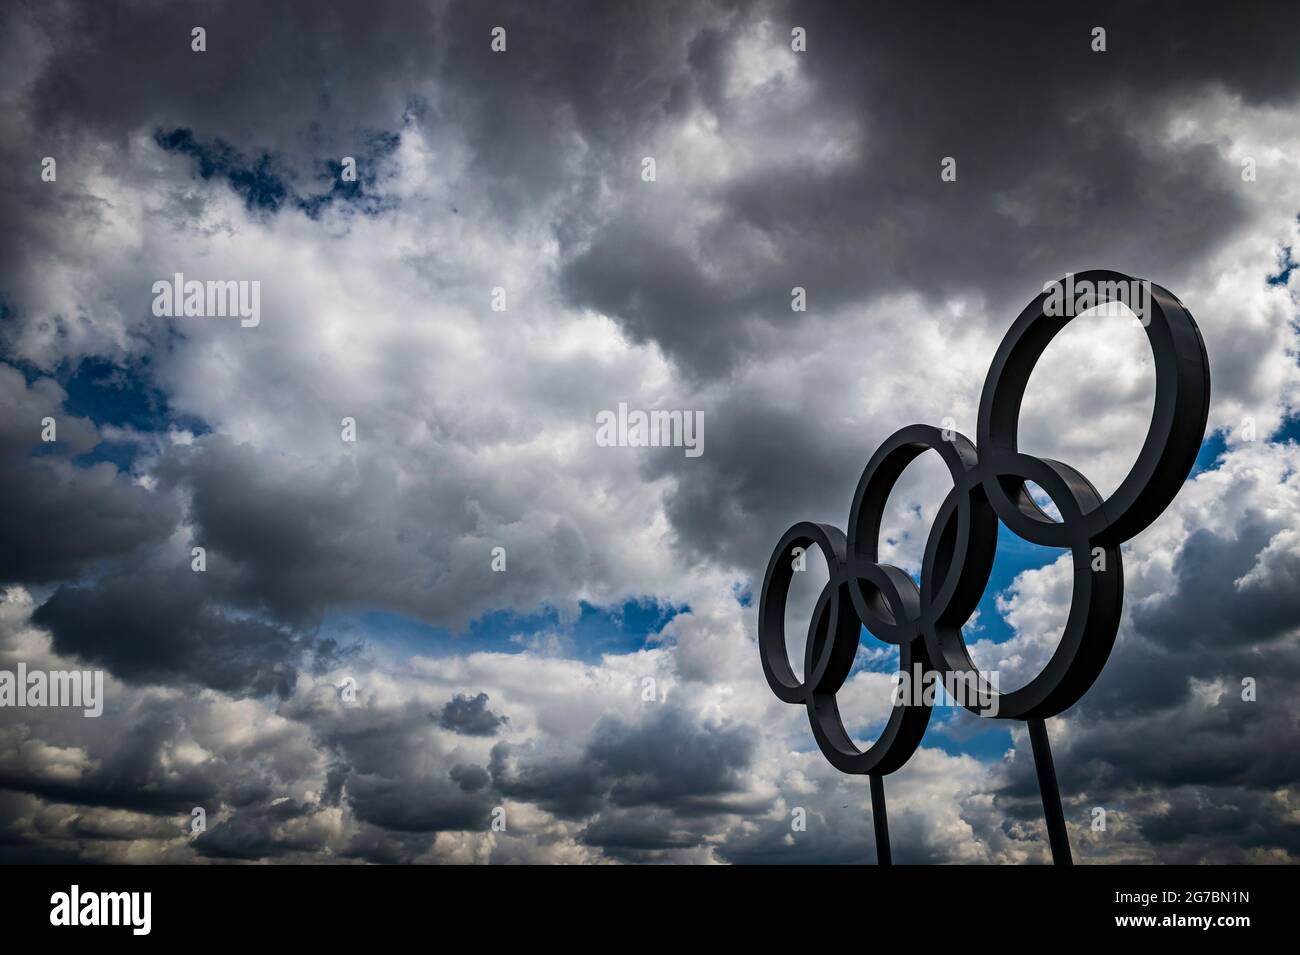 RIO DE JANEIRO - MAY 4, 2016: Metallic silver Olympic Rings stand under gathering dark gray cloudy skies. Stock Photo